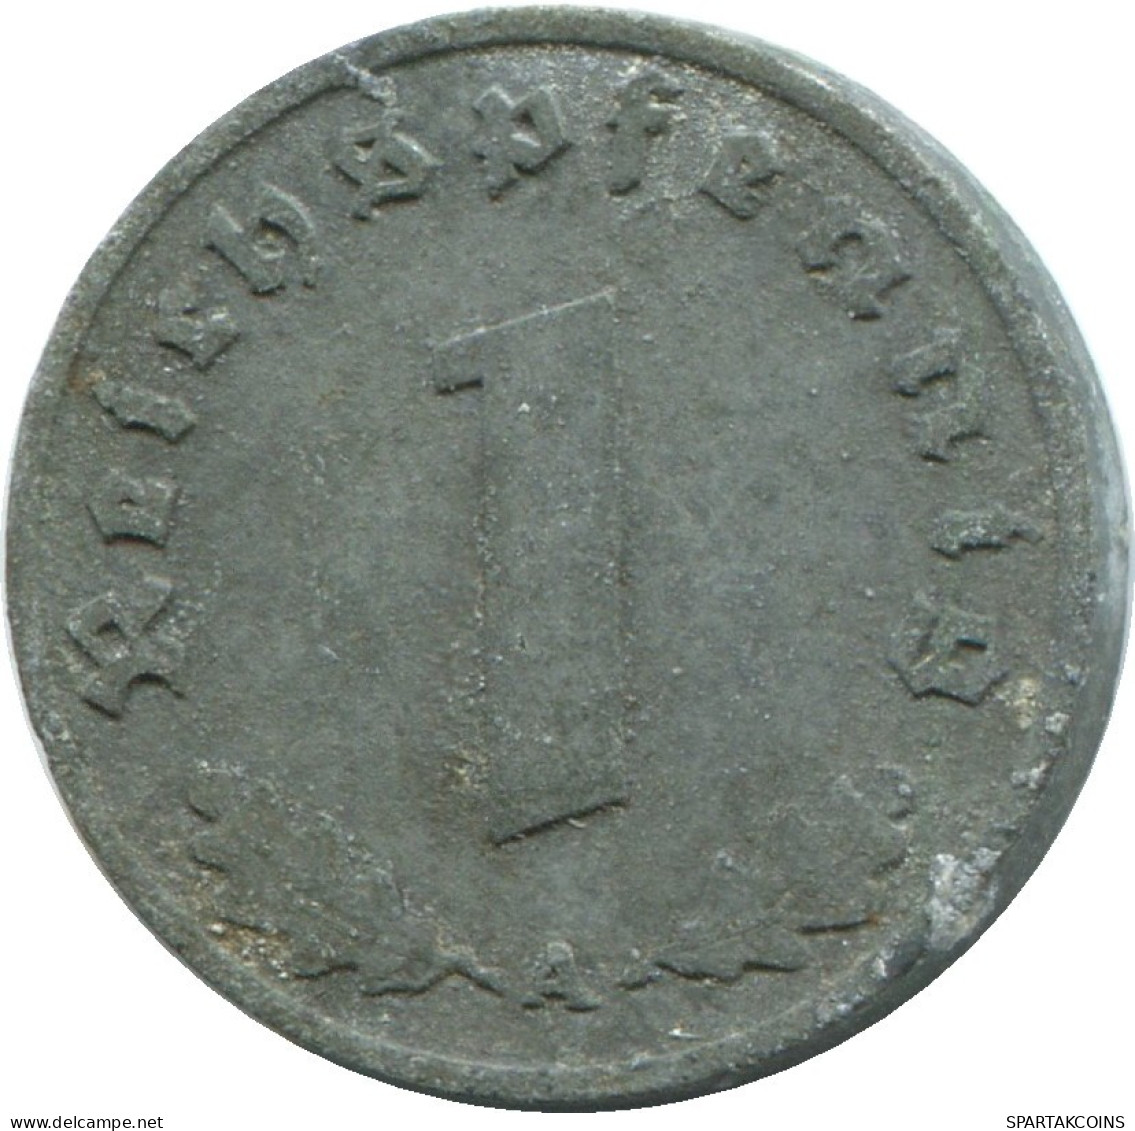 1 REICHSPFENNIG 1940 A ALEMANIA Moneda GERMANY #DE10419.5.E.A - 1 Reichspfennig